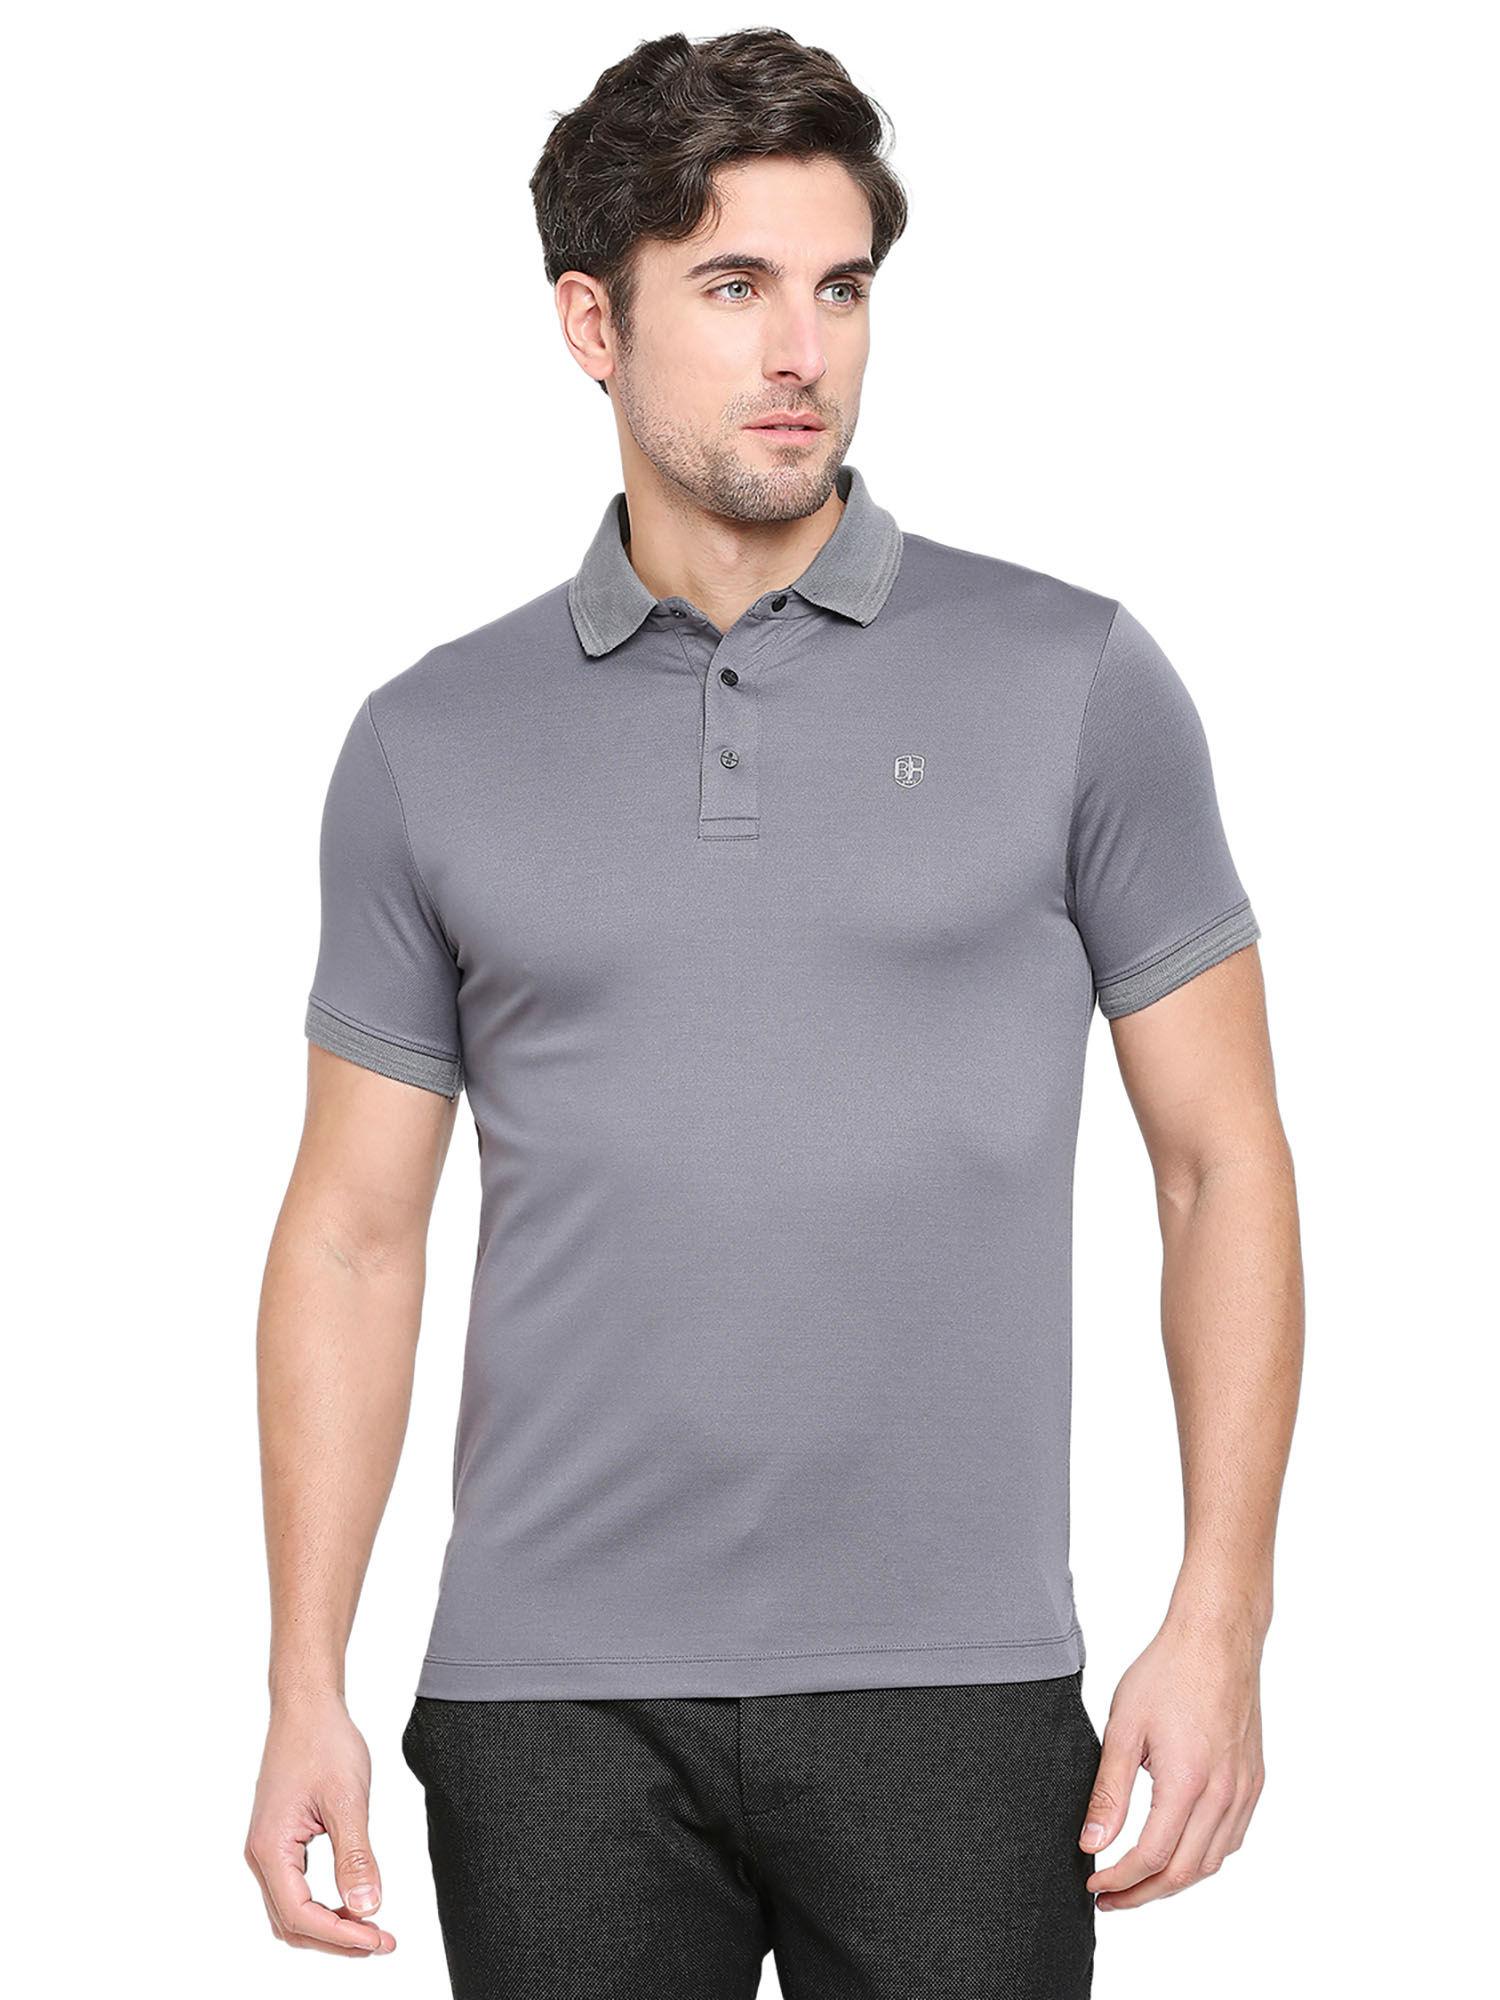 men half sleeves grey solid polo t-shirt